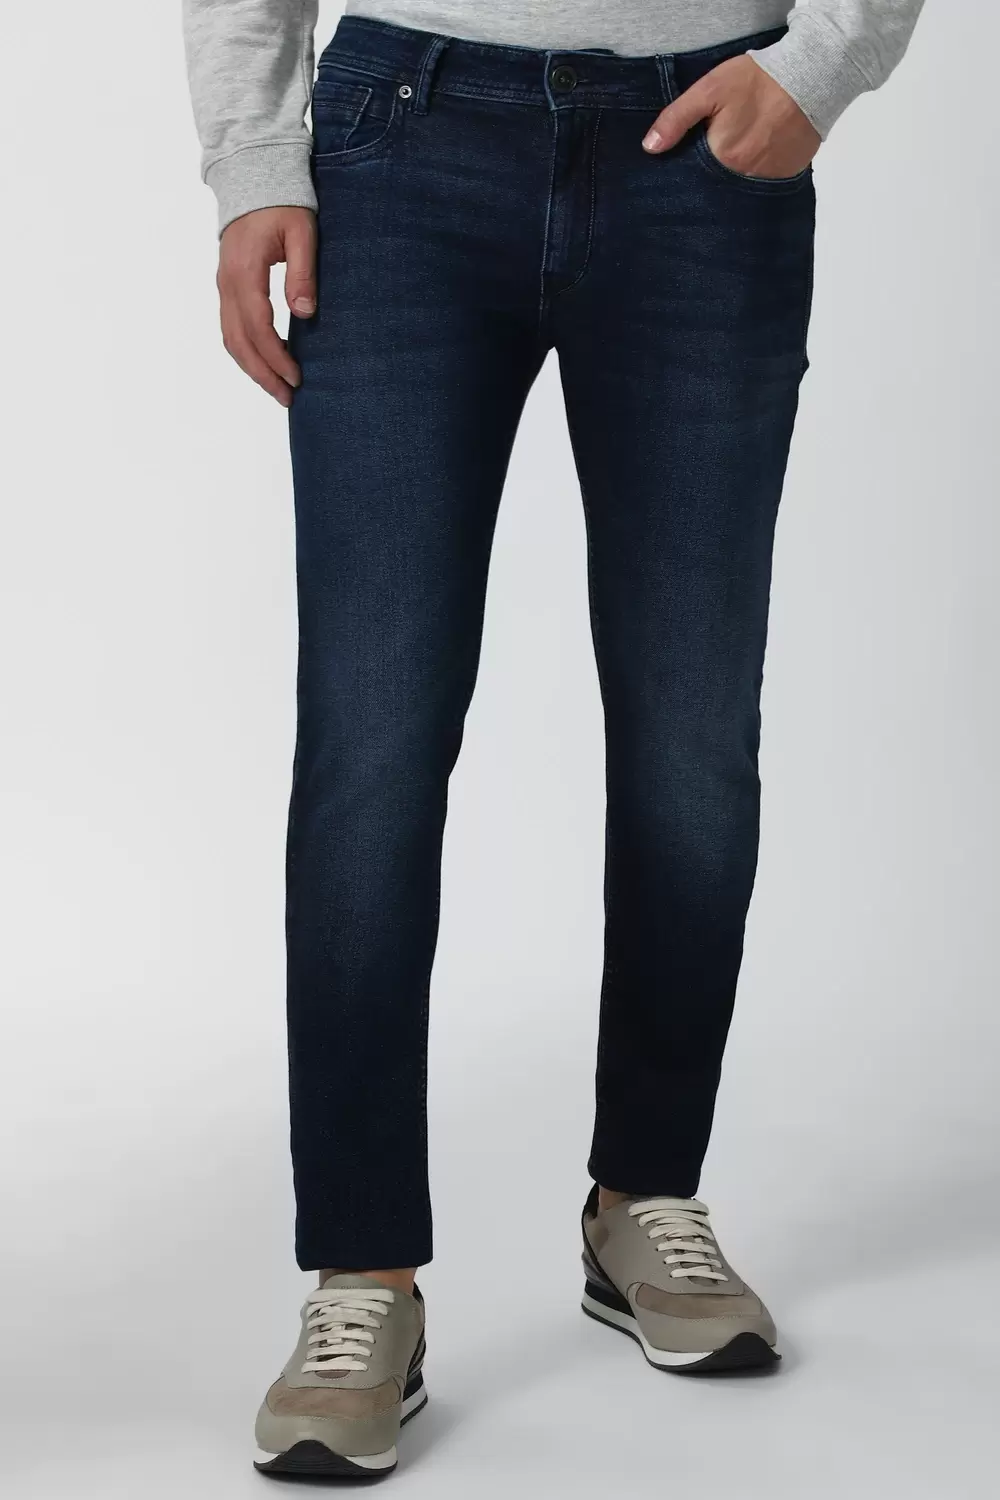 Peter England  Men Navy Dark Wash trendy Slim Fit Jeans